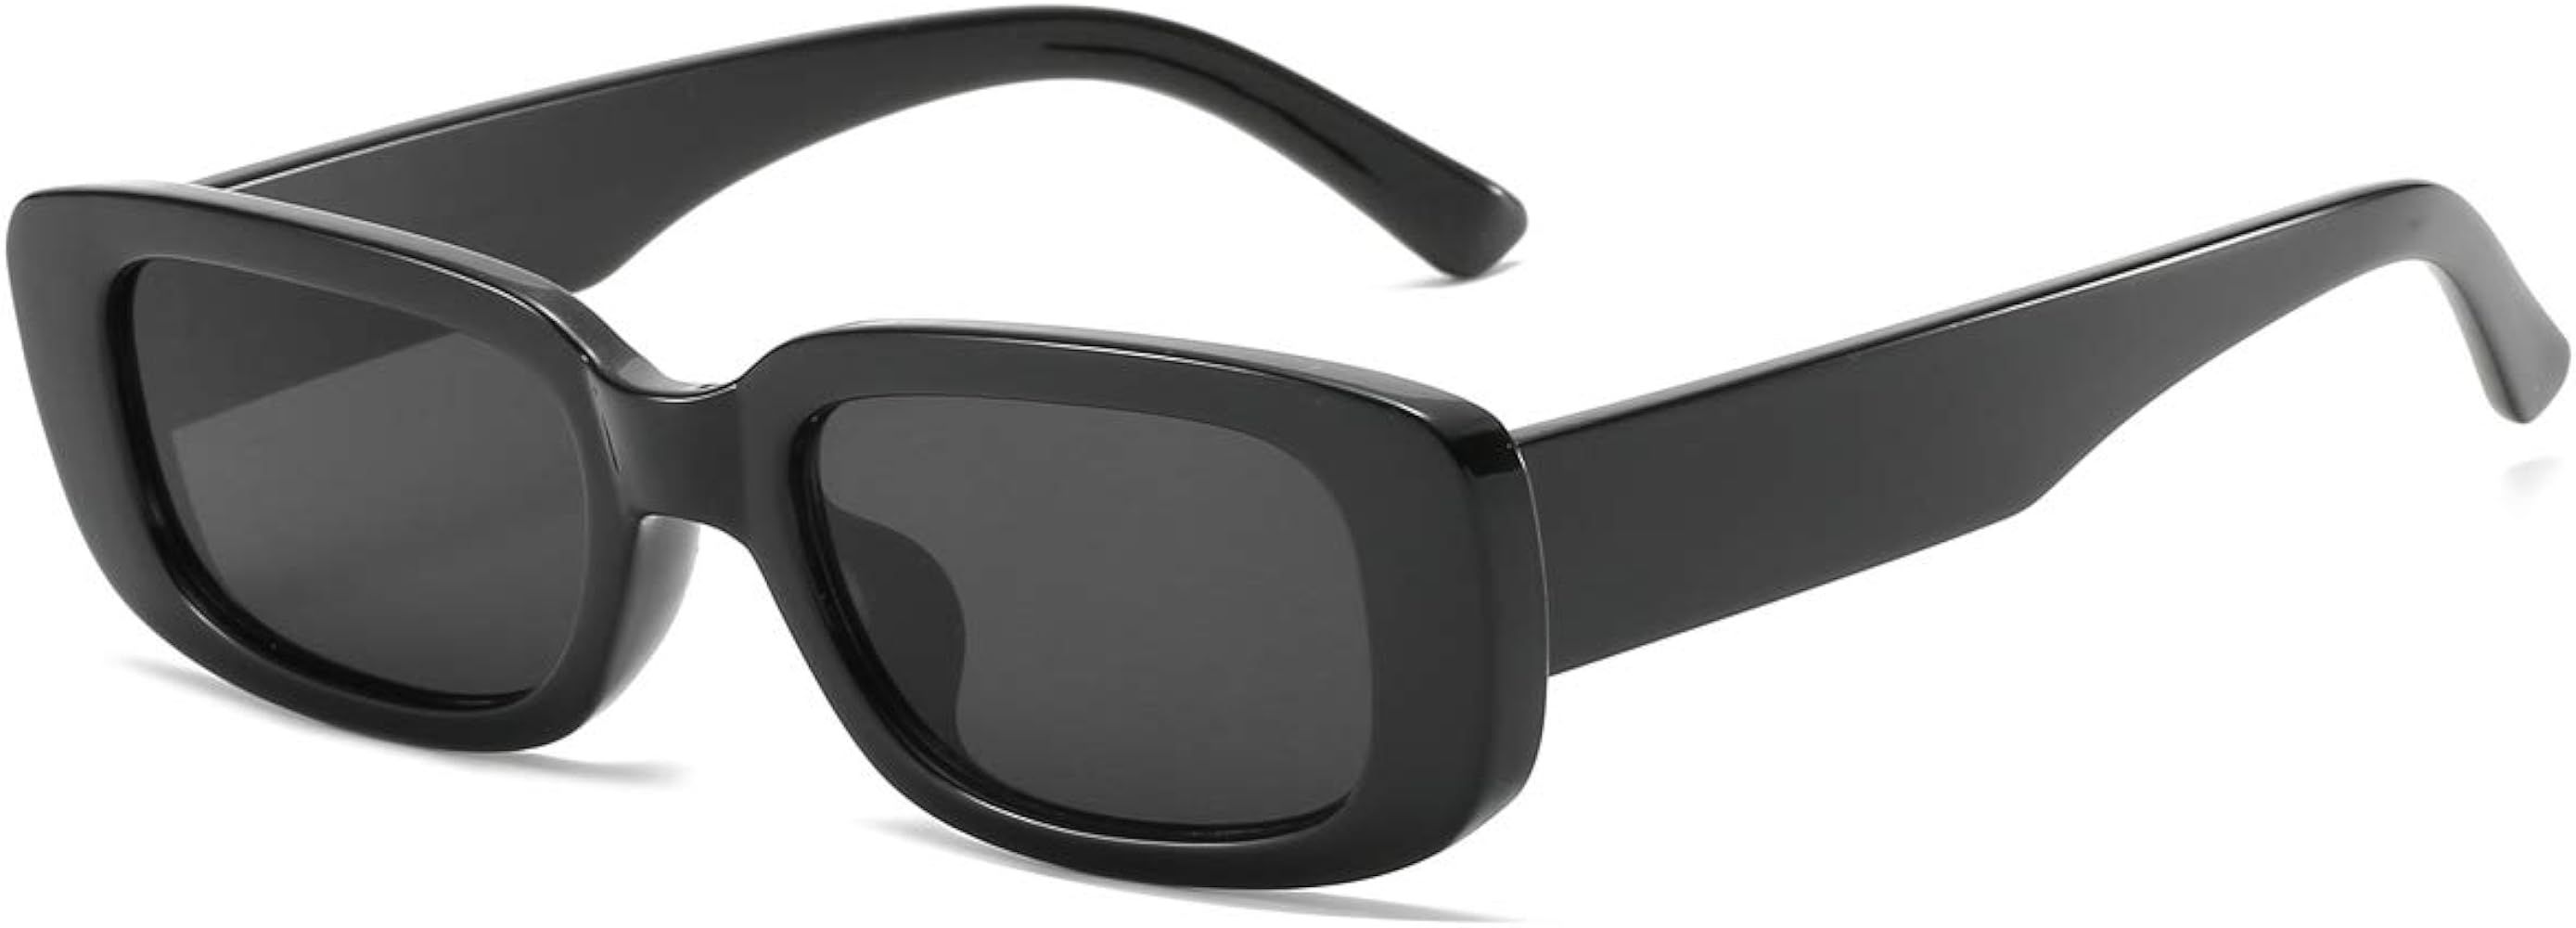 Dollger Rectangle Sunglasses for Women Retro Fashion Sunglasses UV 400 Protection Square Frame Eyewe | Amazon (US)